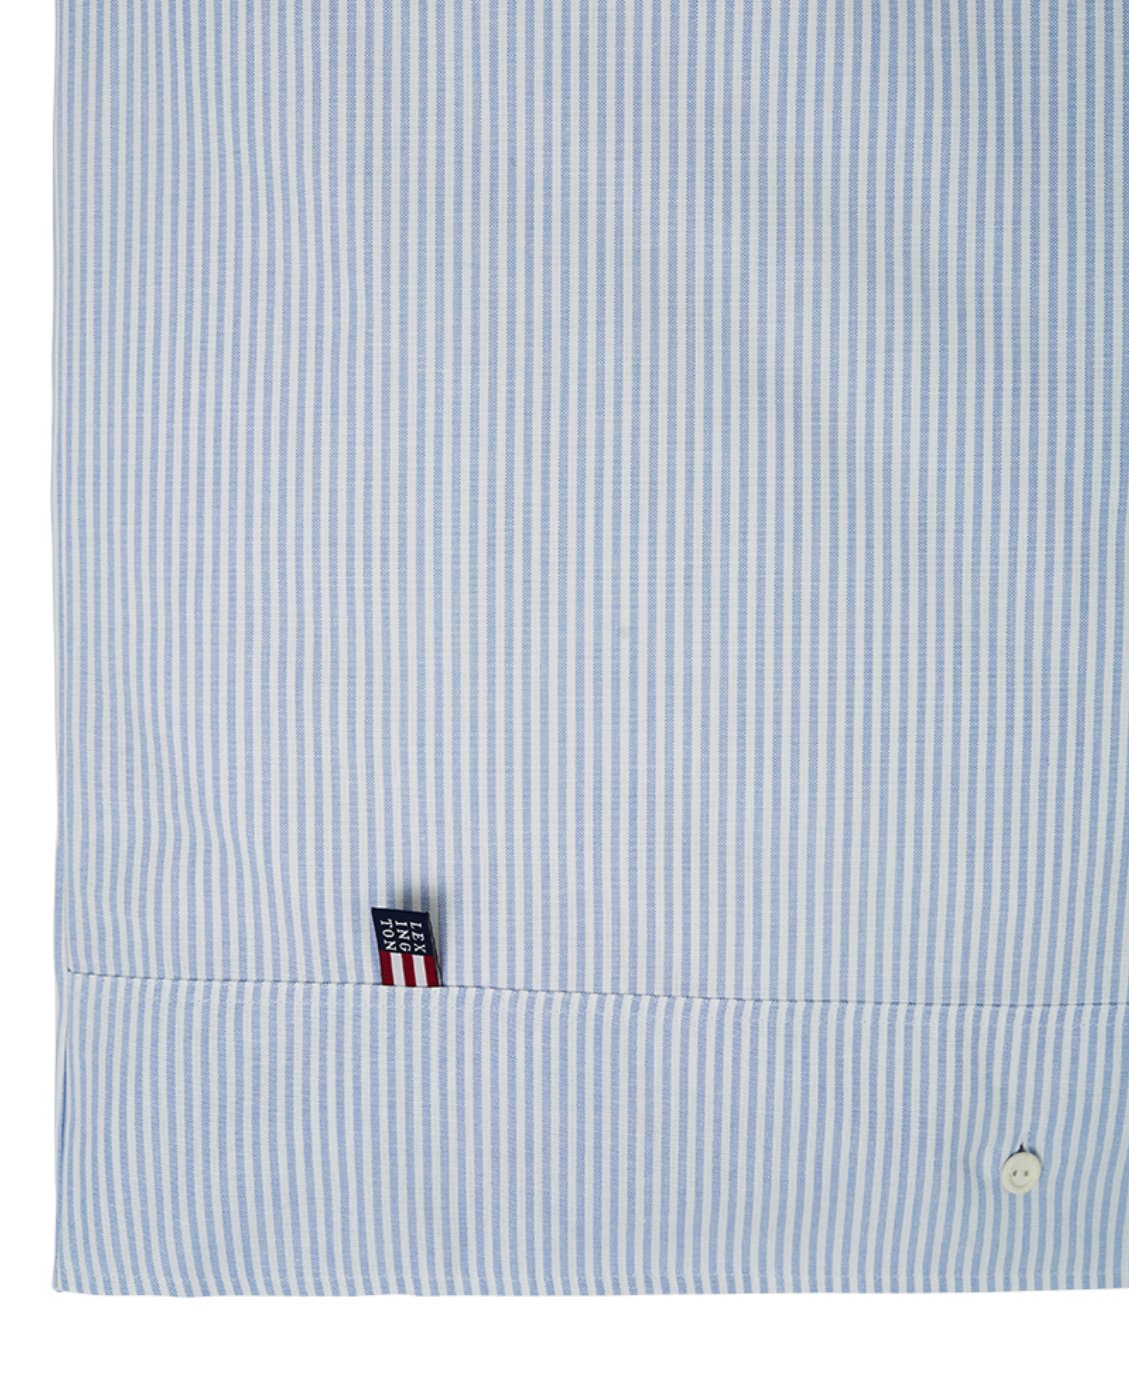 LEXINGTON BETTBEZUG "PIN POINT BLUE/WHITE DUVET" 135x200